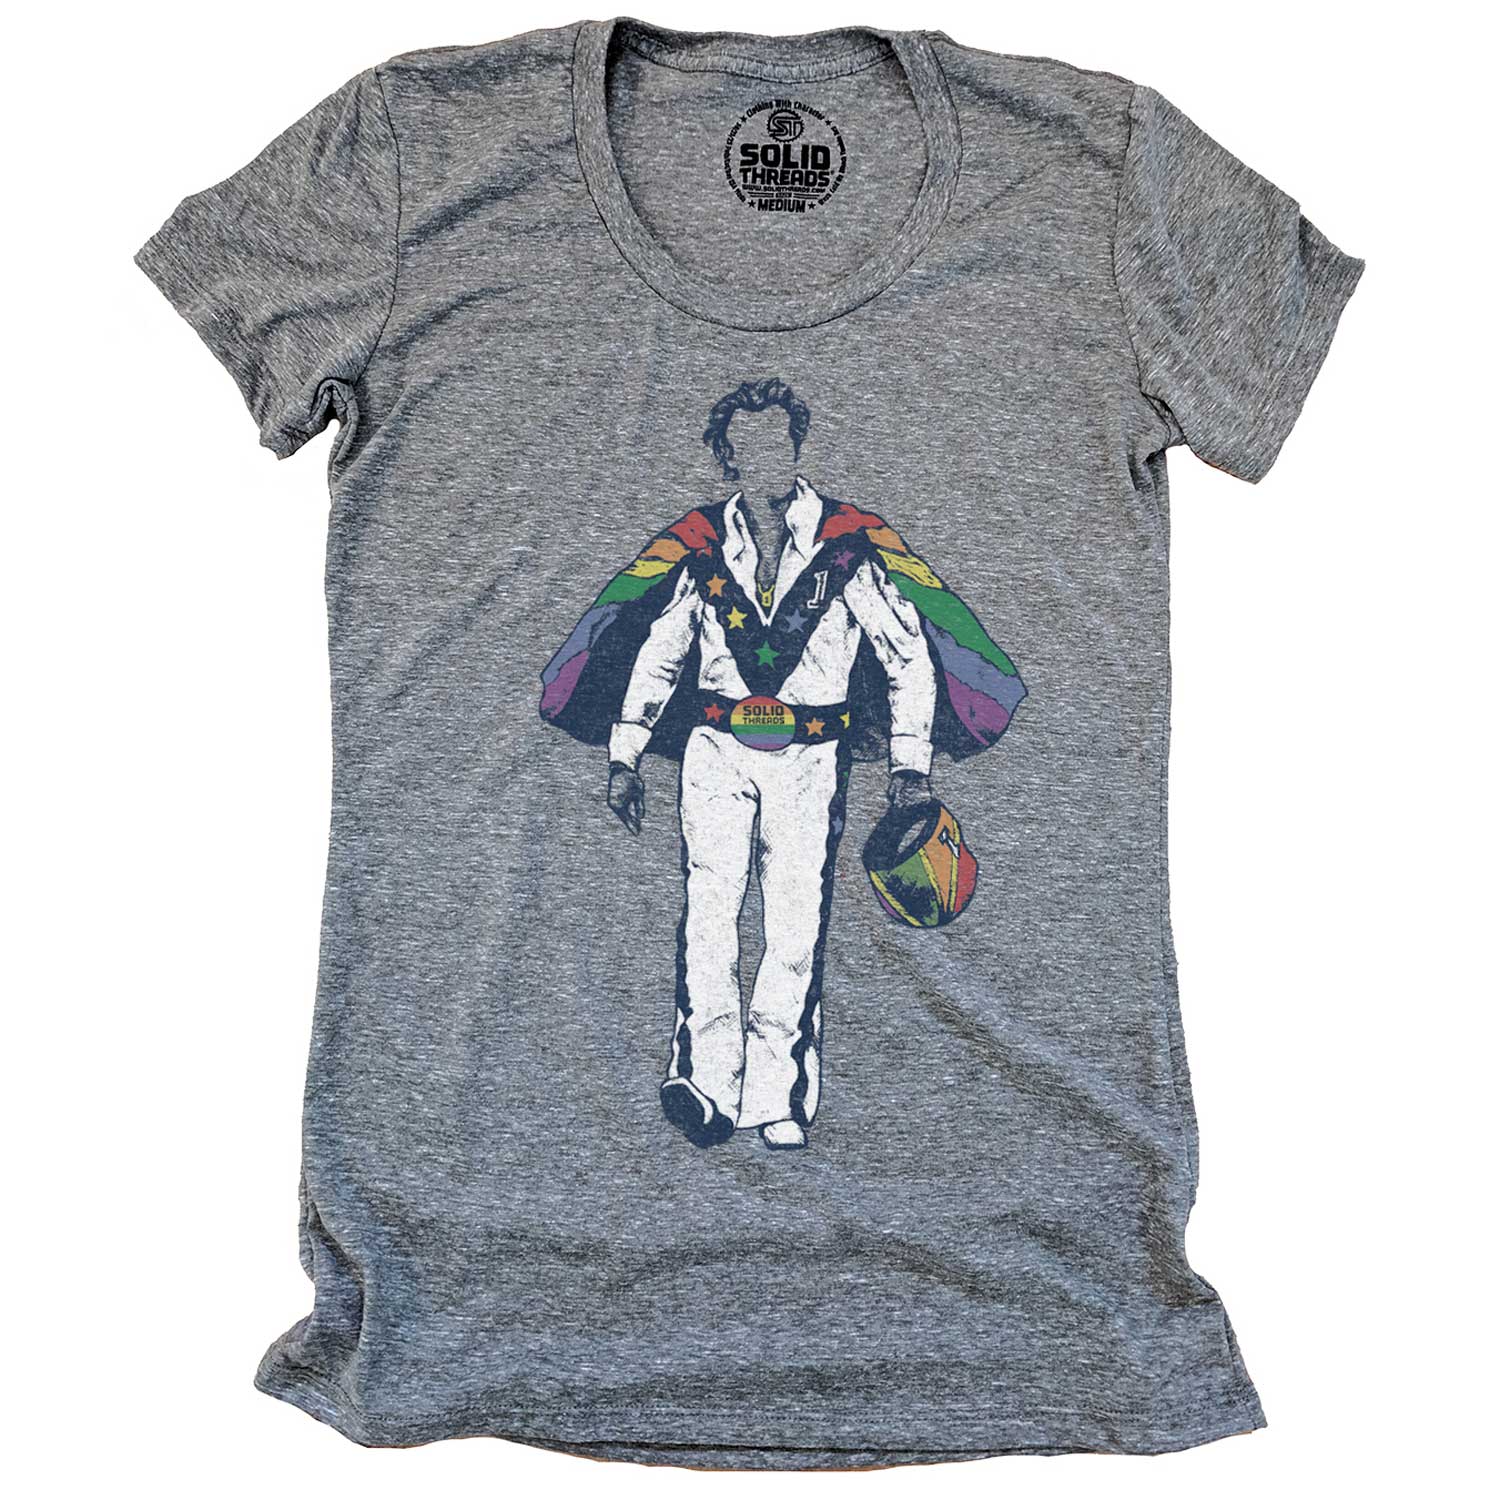 Women's Vintage Pride Daredevil Motorcyclist Graphic Tee | Retro LGBTQ Rainbow T-shirt